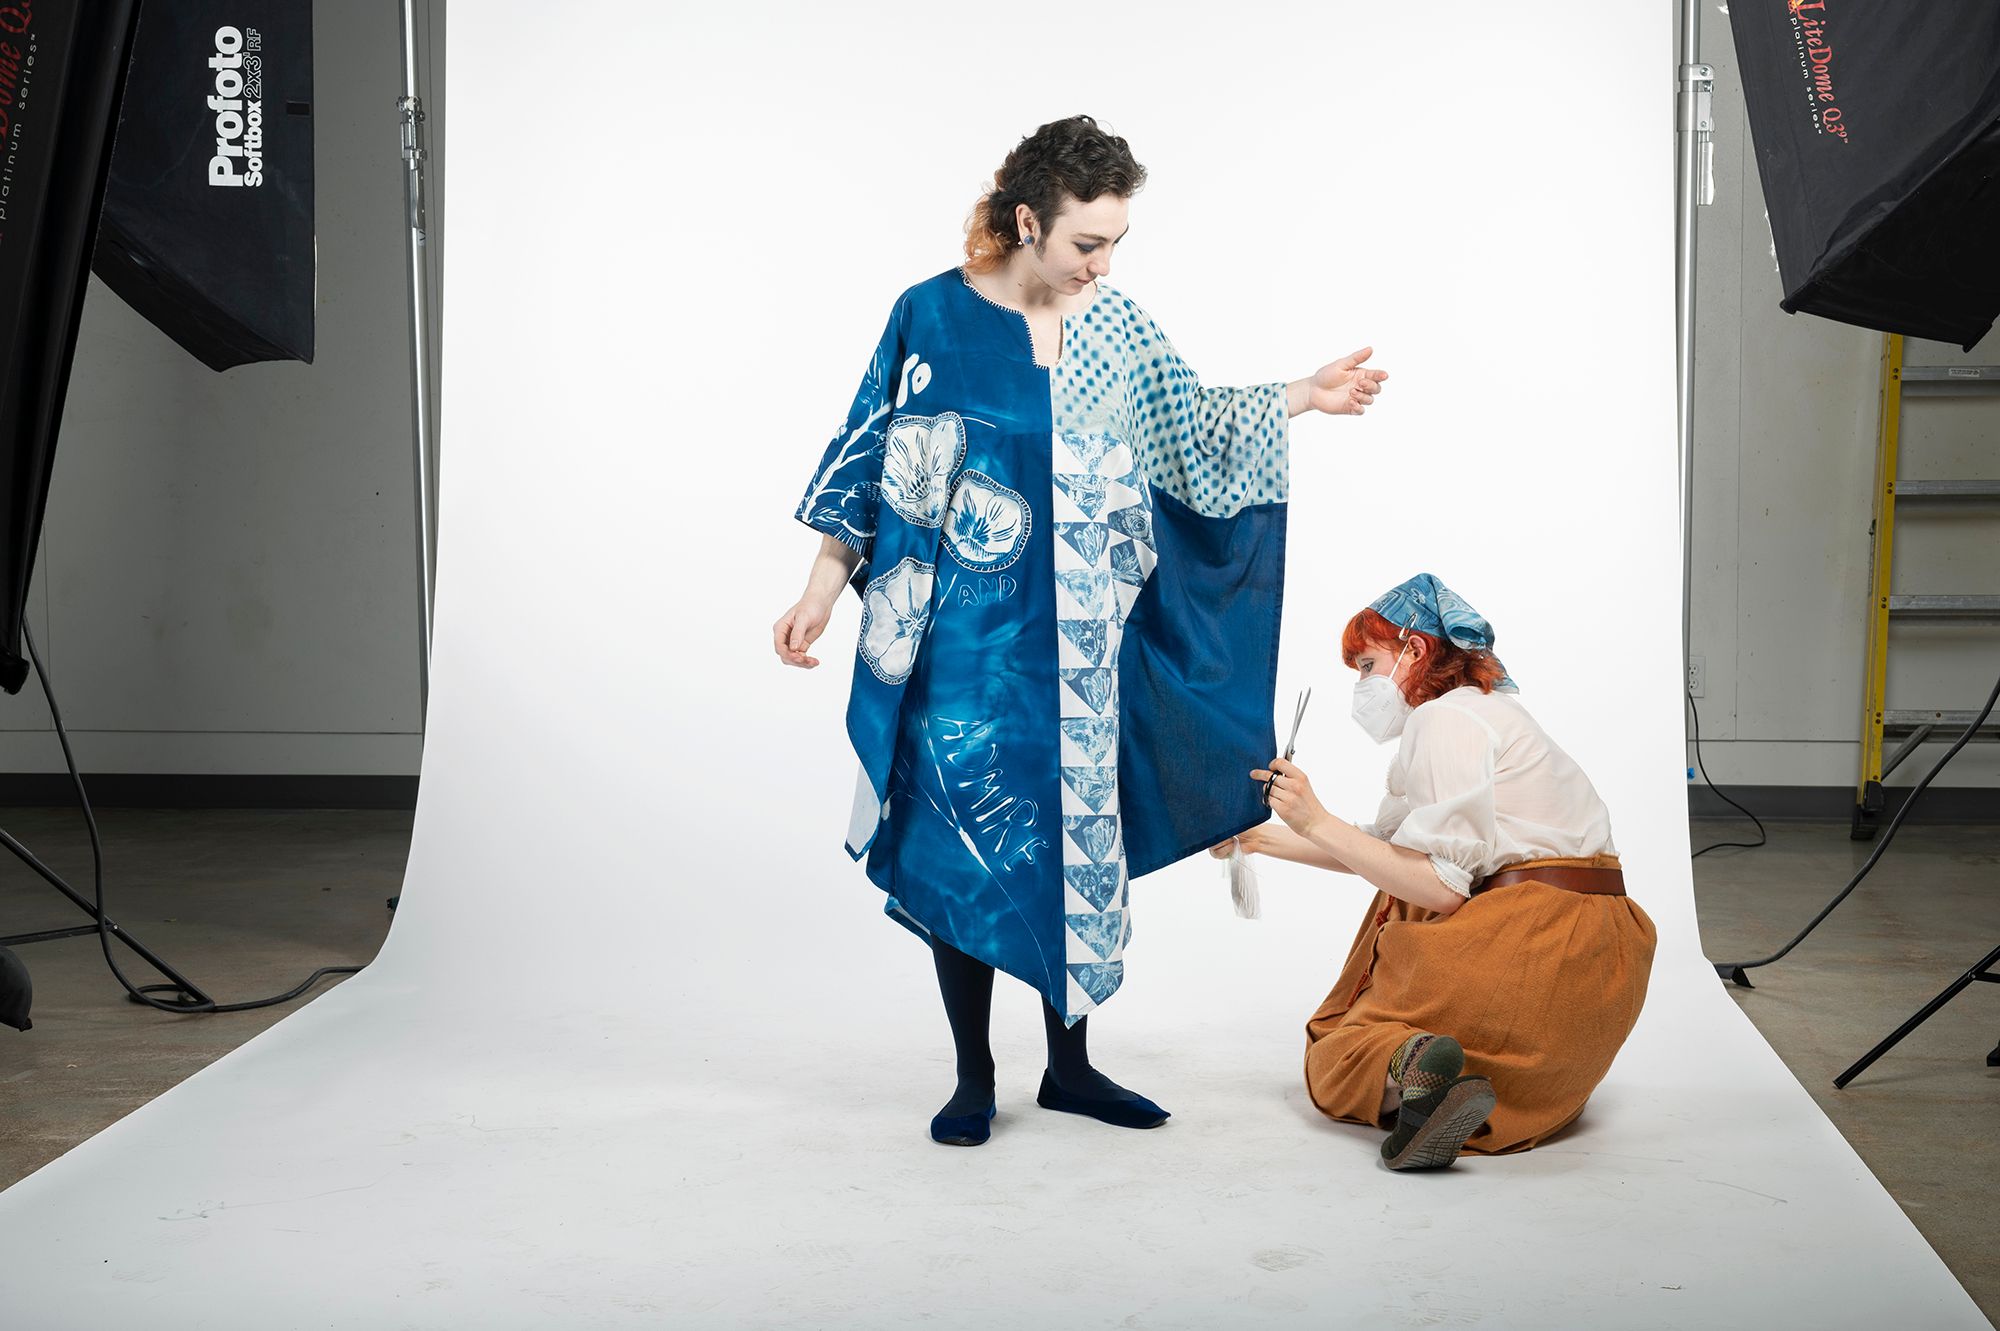 A student adjusting a blue garment on a model.